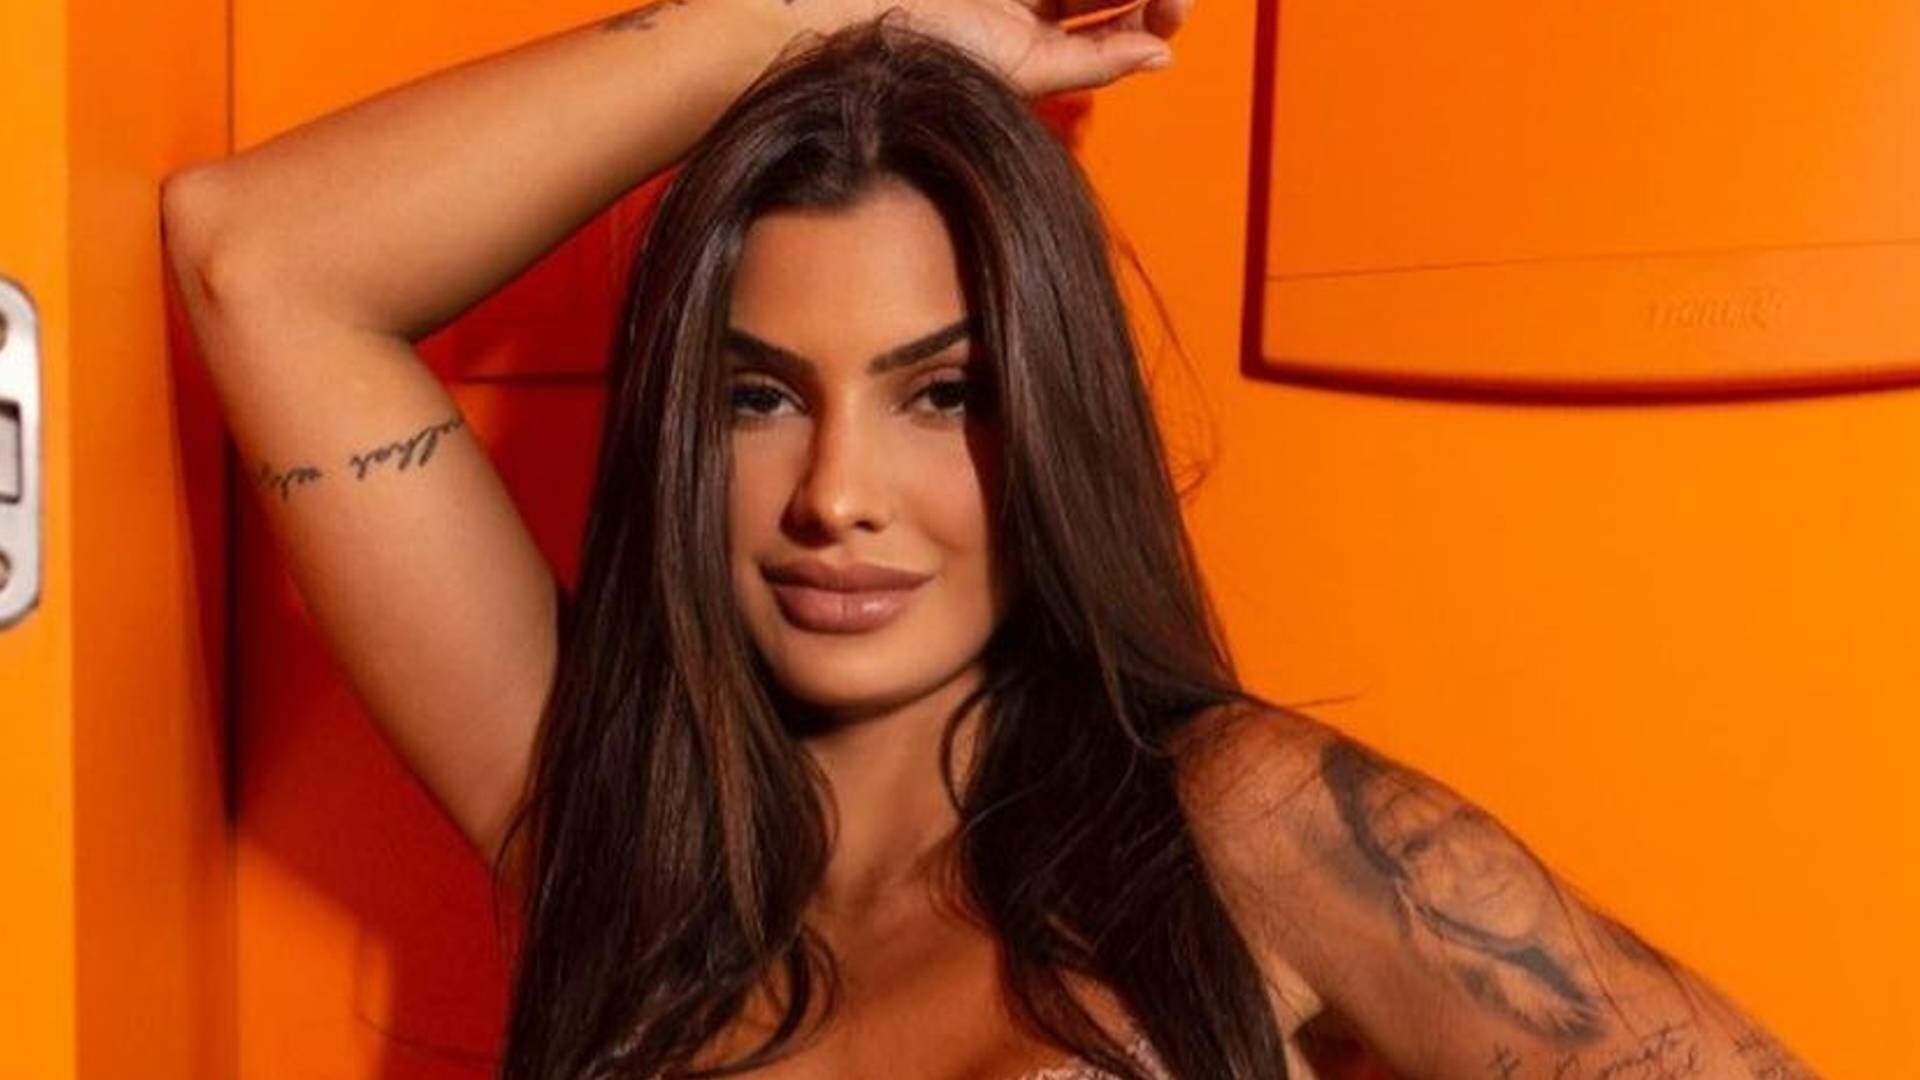 Marina Ferrari exibe look deslumbrante para curtir festa: “Prontíssima” - Metropolitana FM